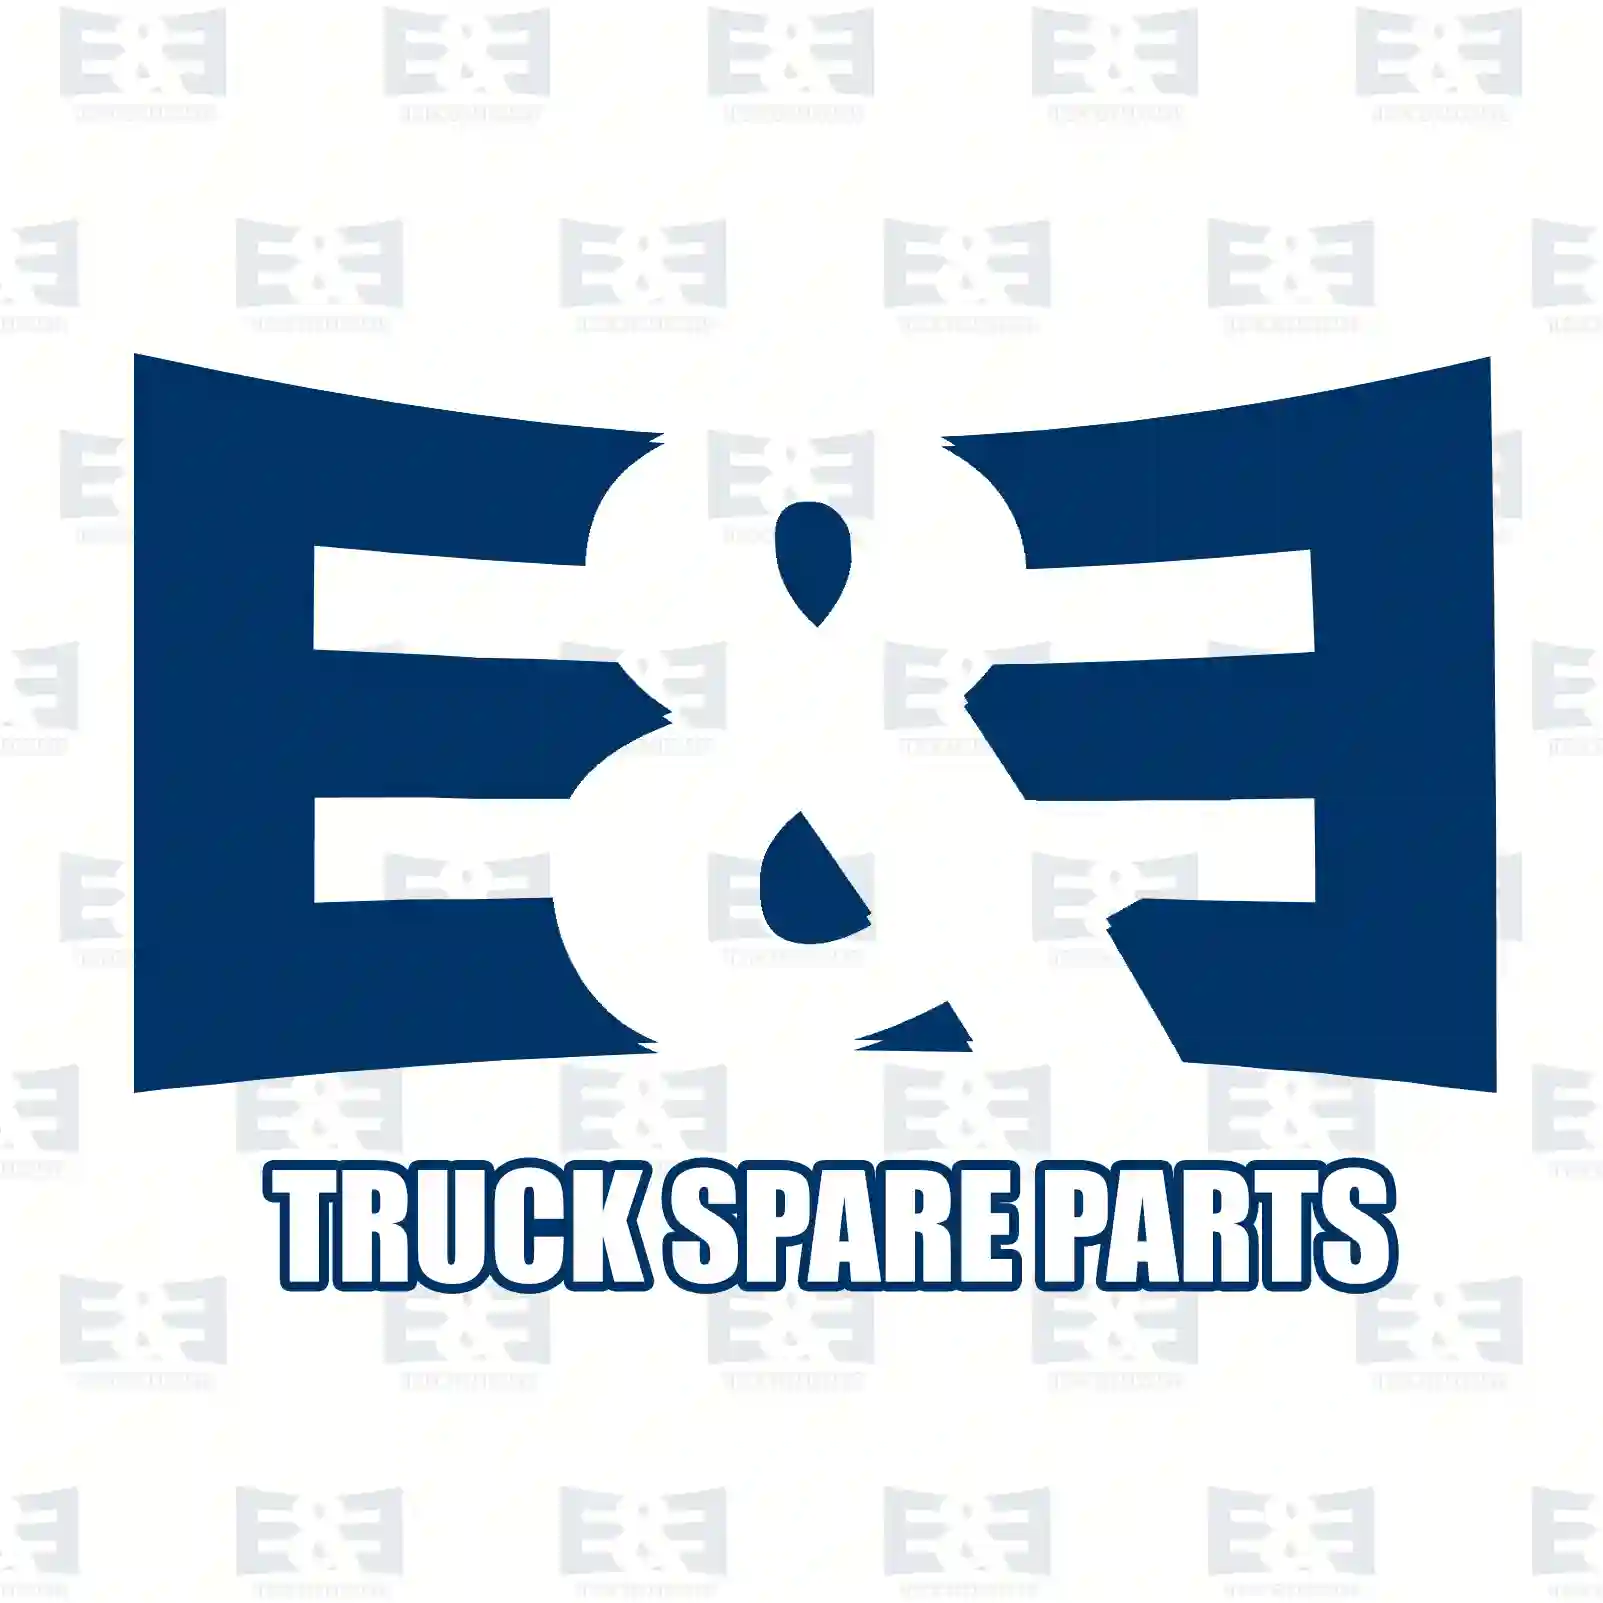 Foot brake valve, 2E2294439, 7421327357, 7422085773, 21327357 ||  2E2294439 E&E Truck Spare Parts | Truck Spare Parts, Auotomotive Spare Parts Foot brake valve, 2E2294439, 7421327357, 7422085773, 21327357 ||  2E2294439 E&E Truck Spare Parts | Truck Spare Parts, Auotomotive Spare Parts